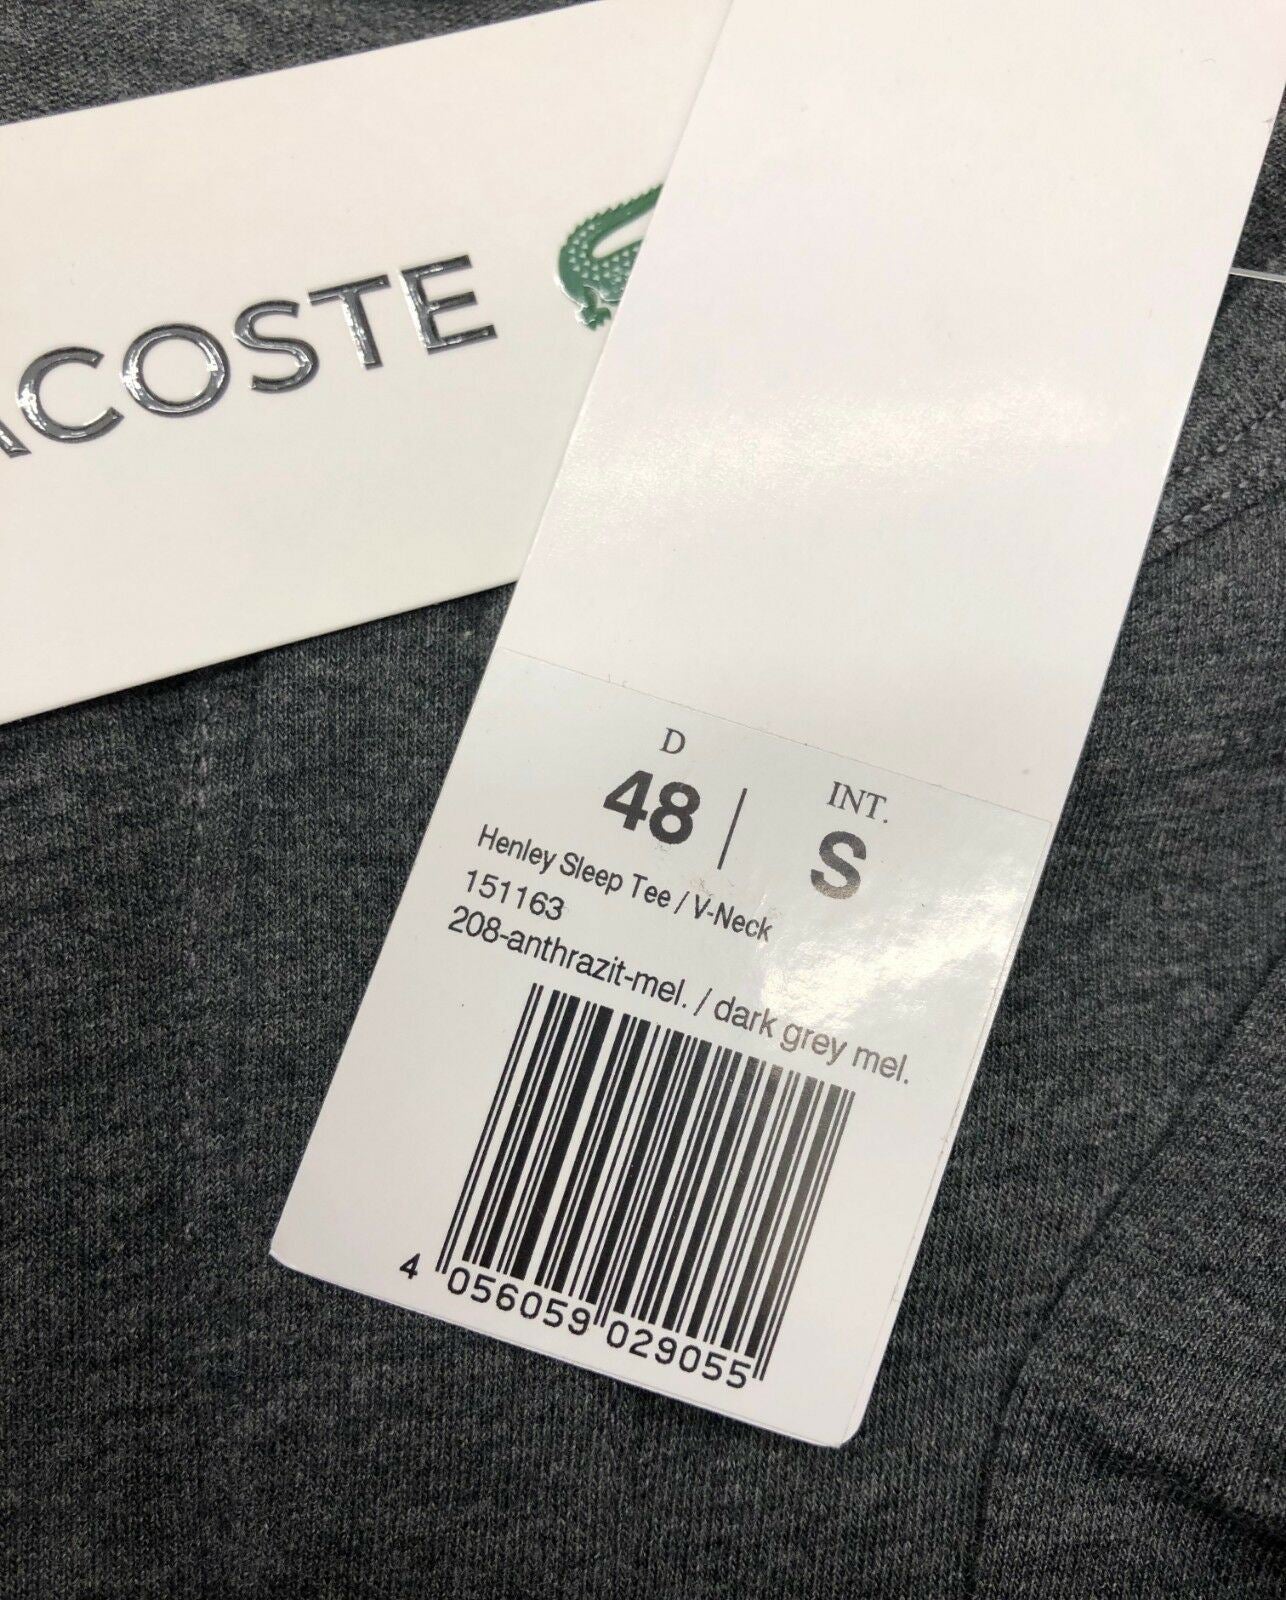 LACOSTE Men's Grey HENLEY Sleeping T-Shirt, Loungewear Top, size SMALL